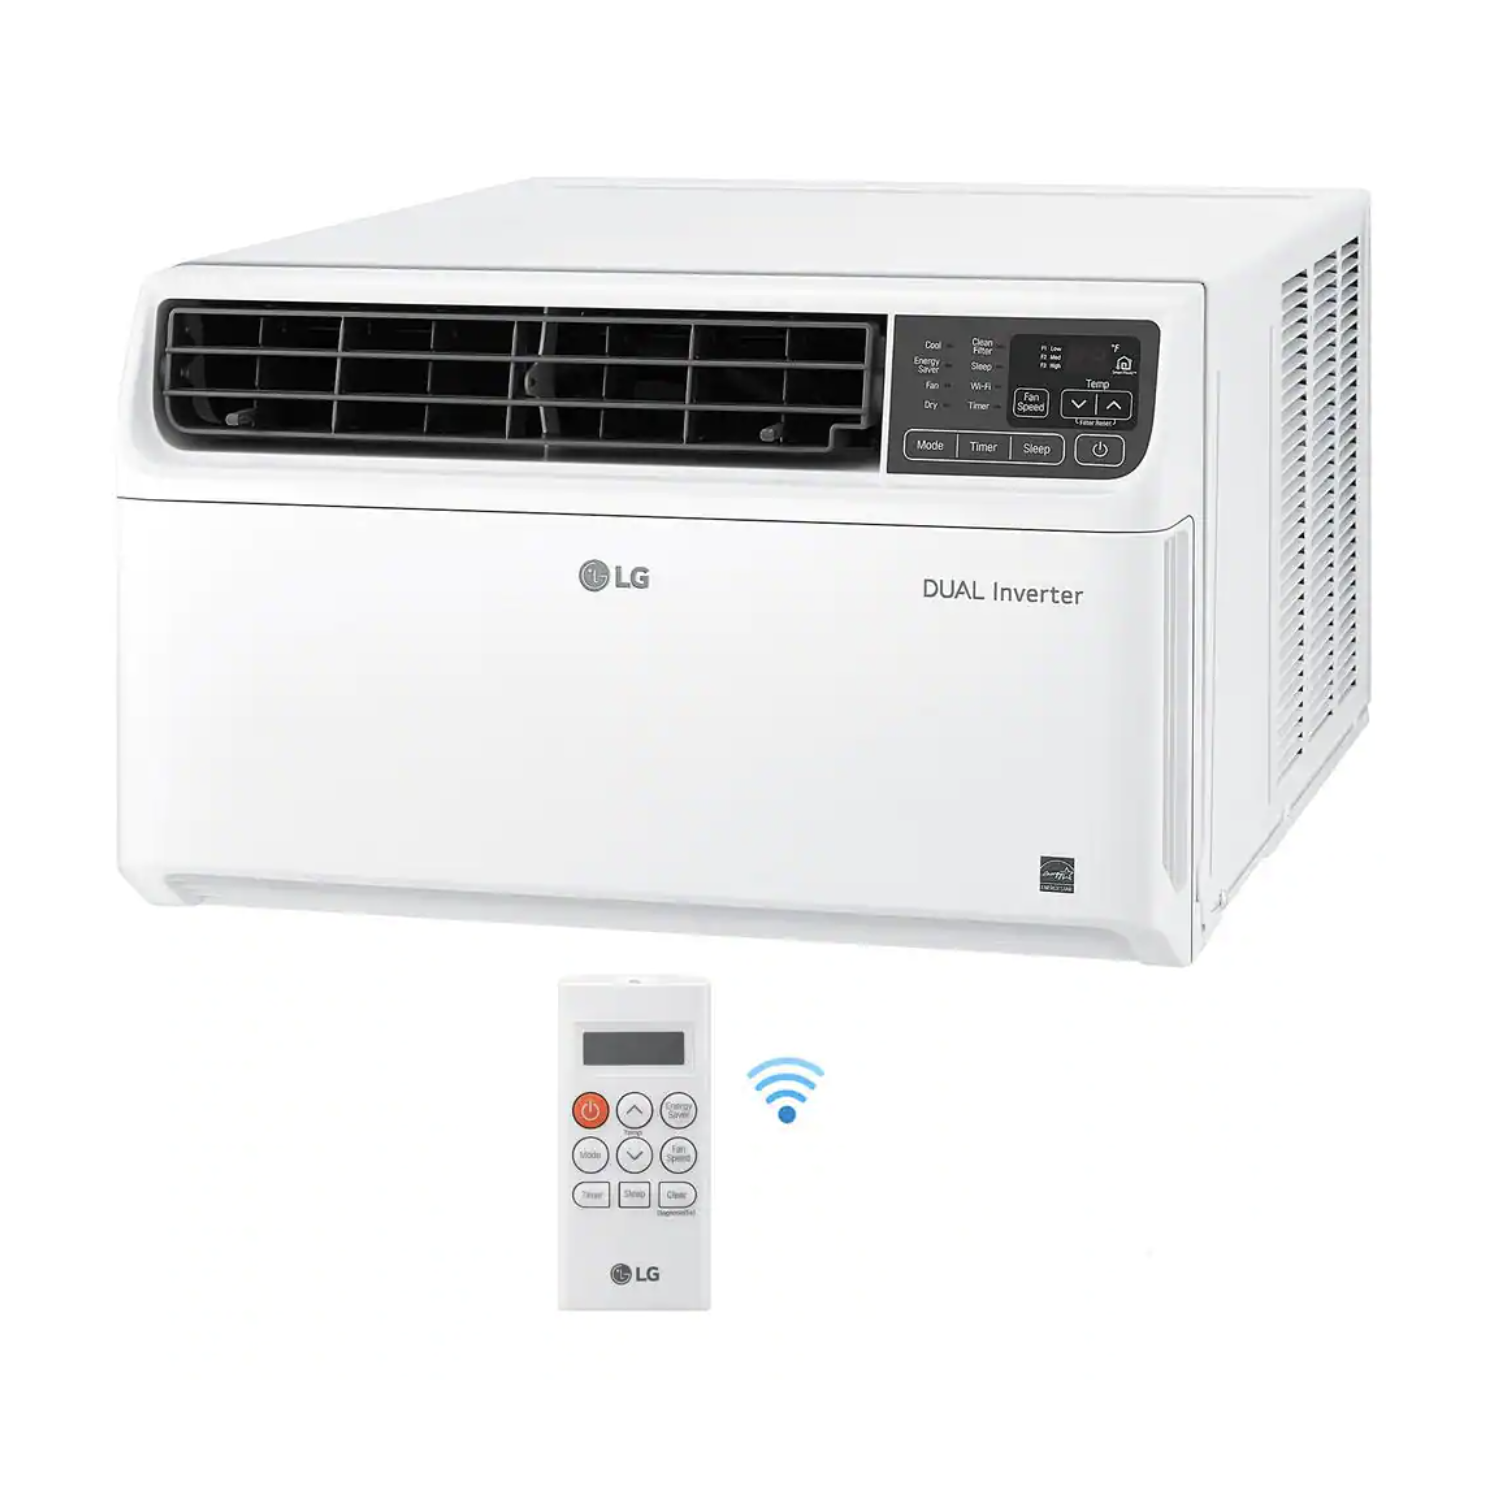 LG 18,000 BTU Dual Inverter Smart (Wi-Fi) Window Air Conditioner, Cools 1000 Sq.Ft, Ultra Quiet, 35% Energy Savings, Works w/ LG ThinQ, Alexa, Google & Remote - 230 V (LW1822IVISM)